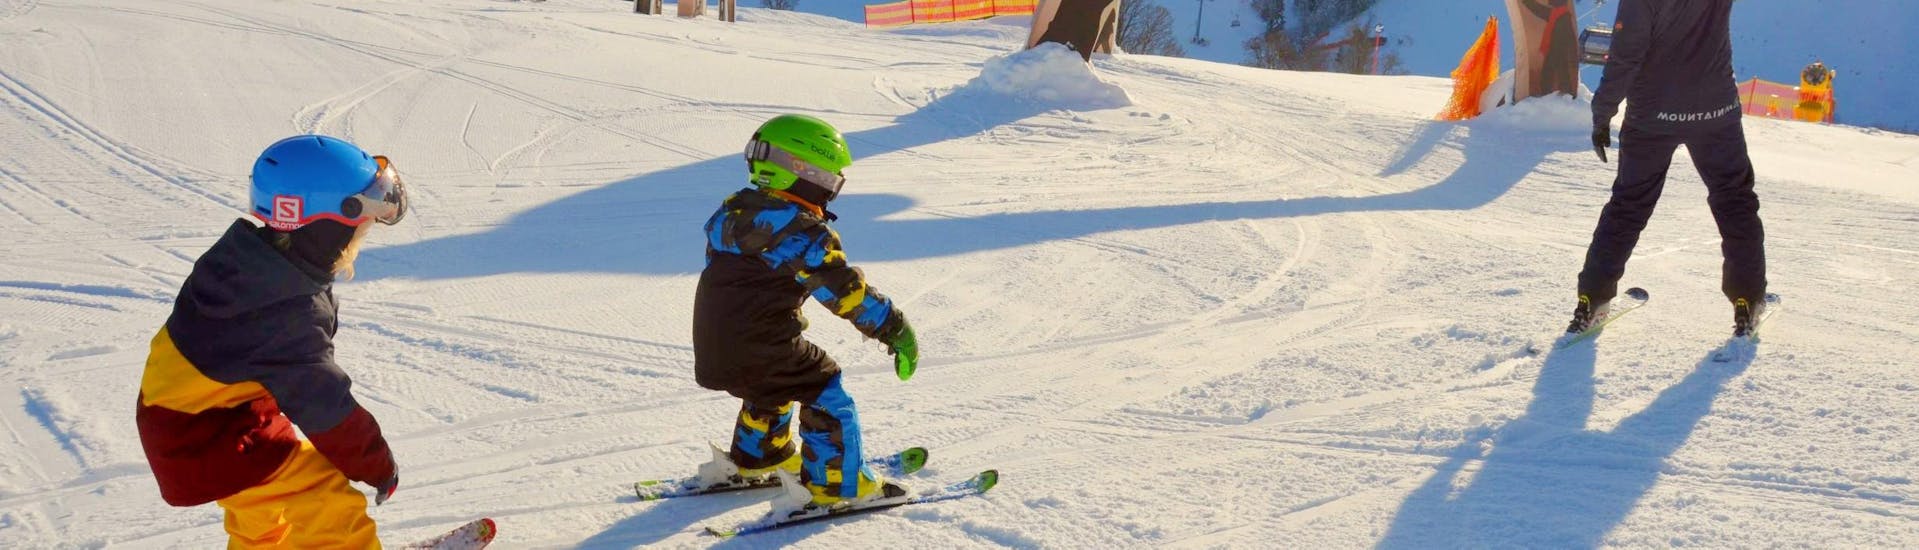 Kinder-Skikurs MAX 7 (ab 6 J.) für Kinder ab Basiskönnen mit Skisportschule Mountainmind Söll - Hero image